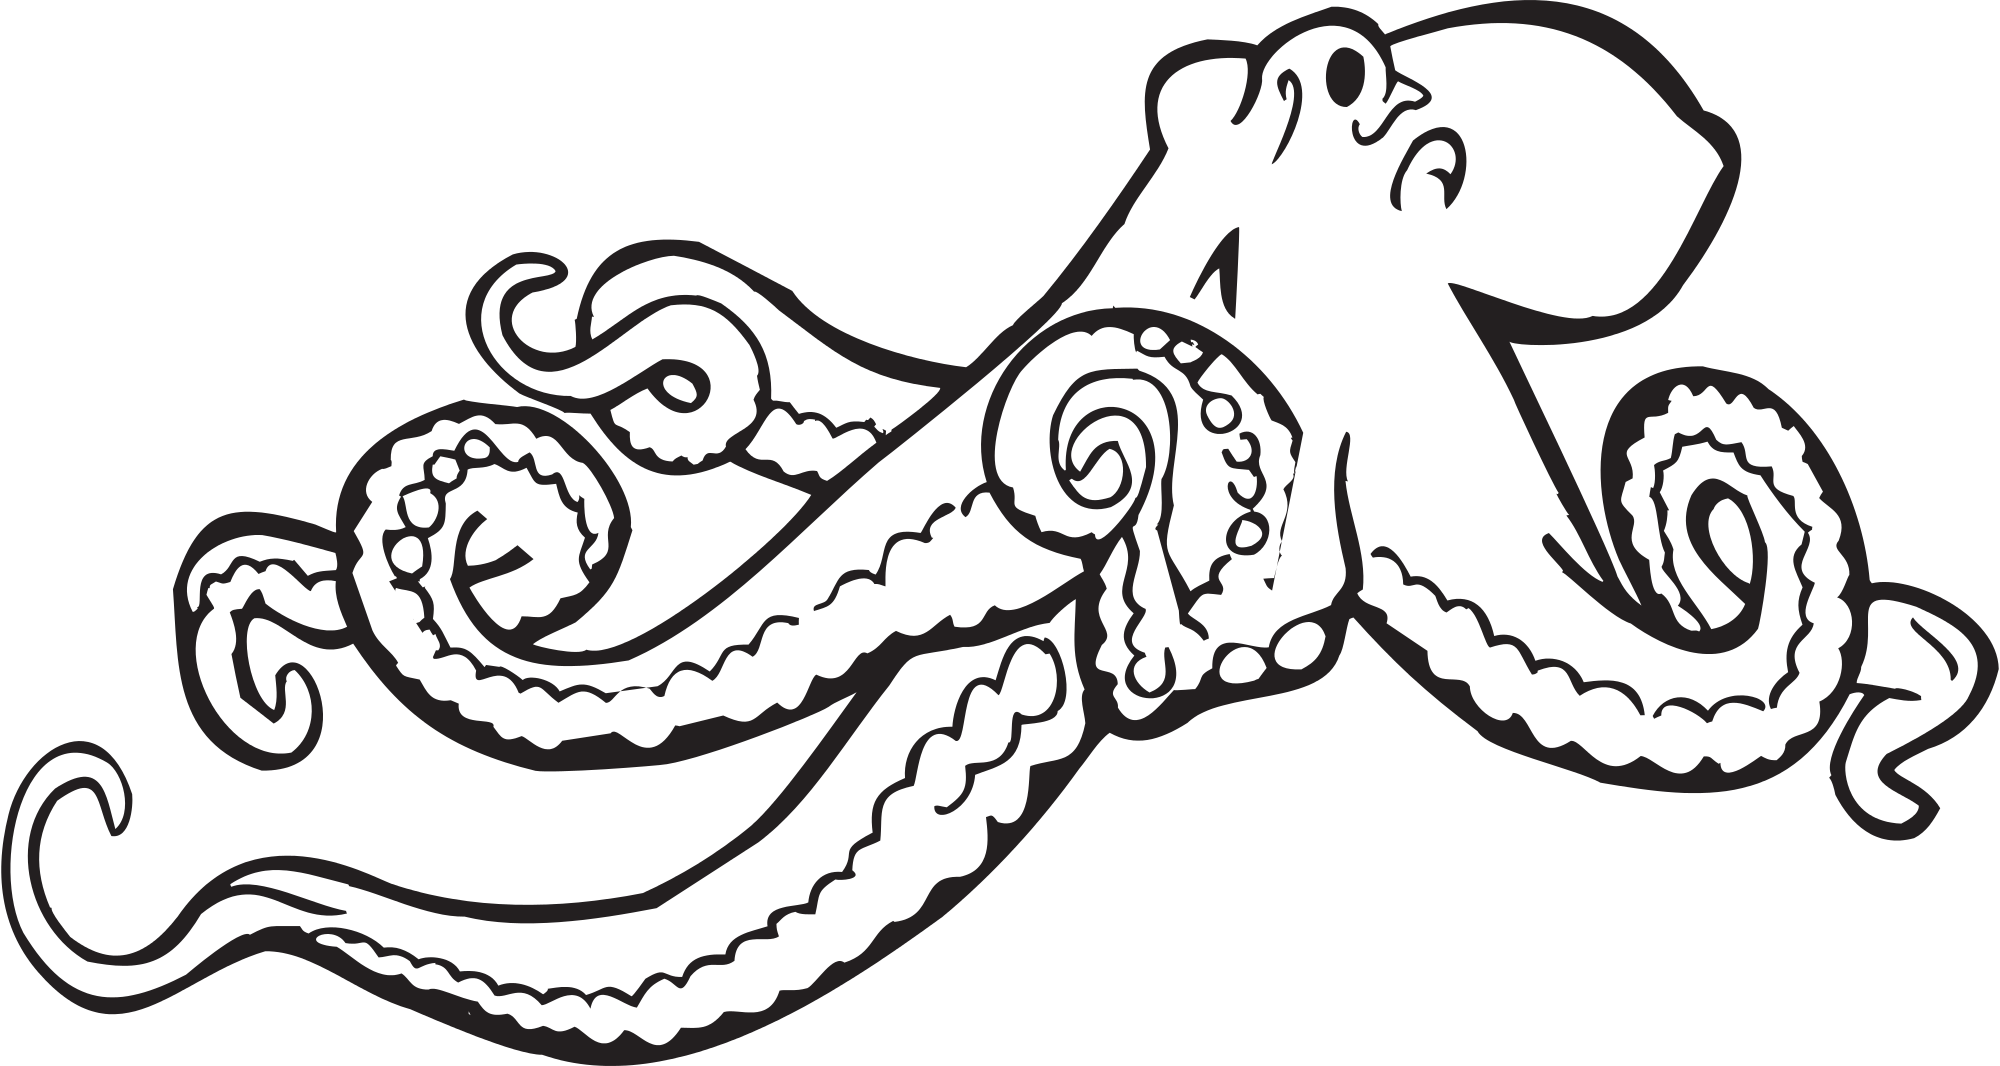 Octopus clipart illustrations 2 octopus clip art vector image 2